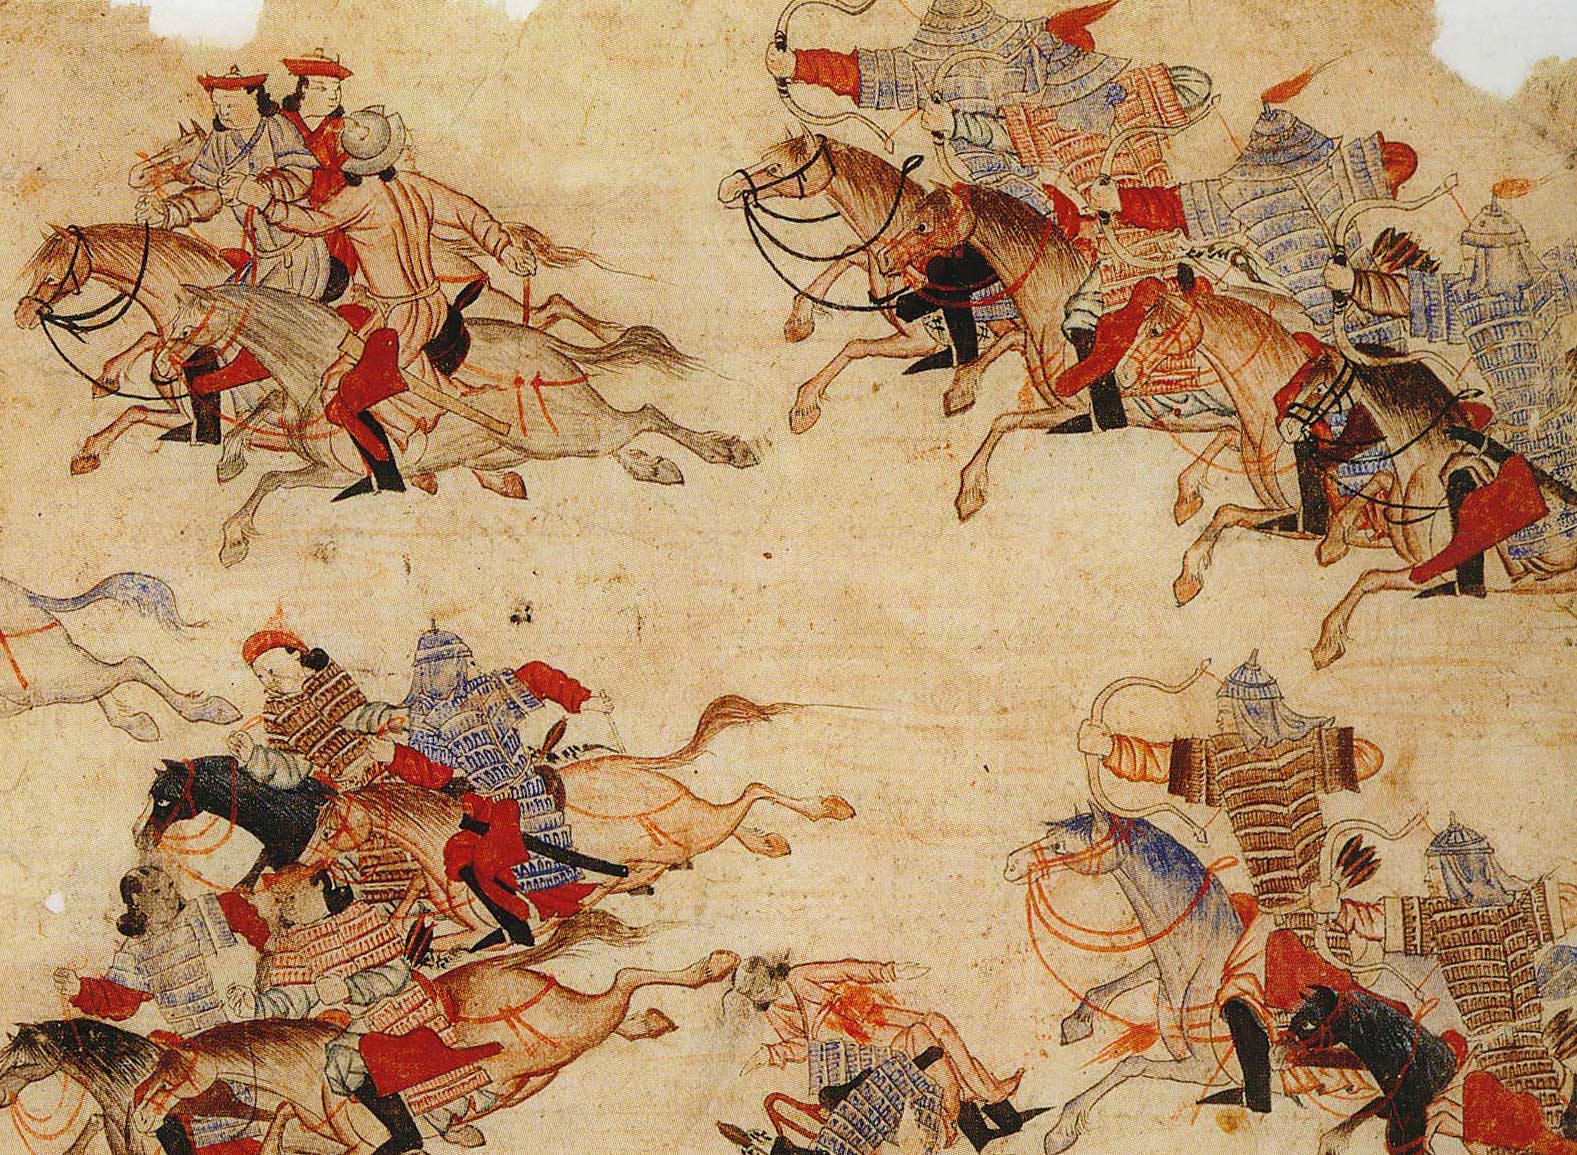 genghis khan army tactics